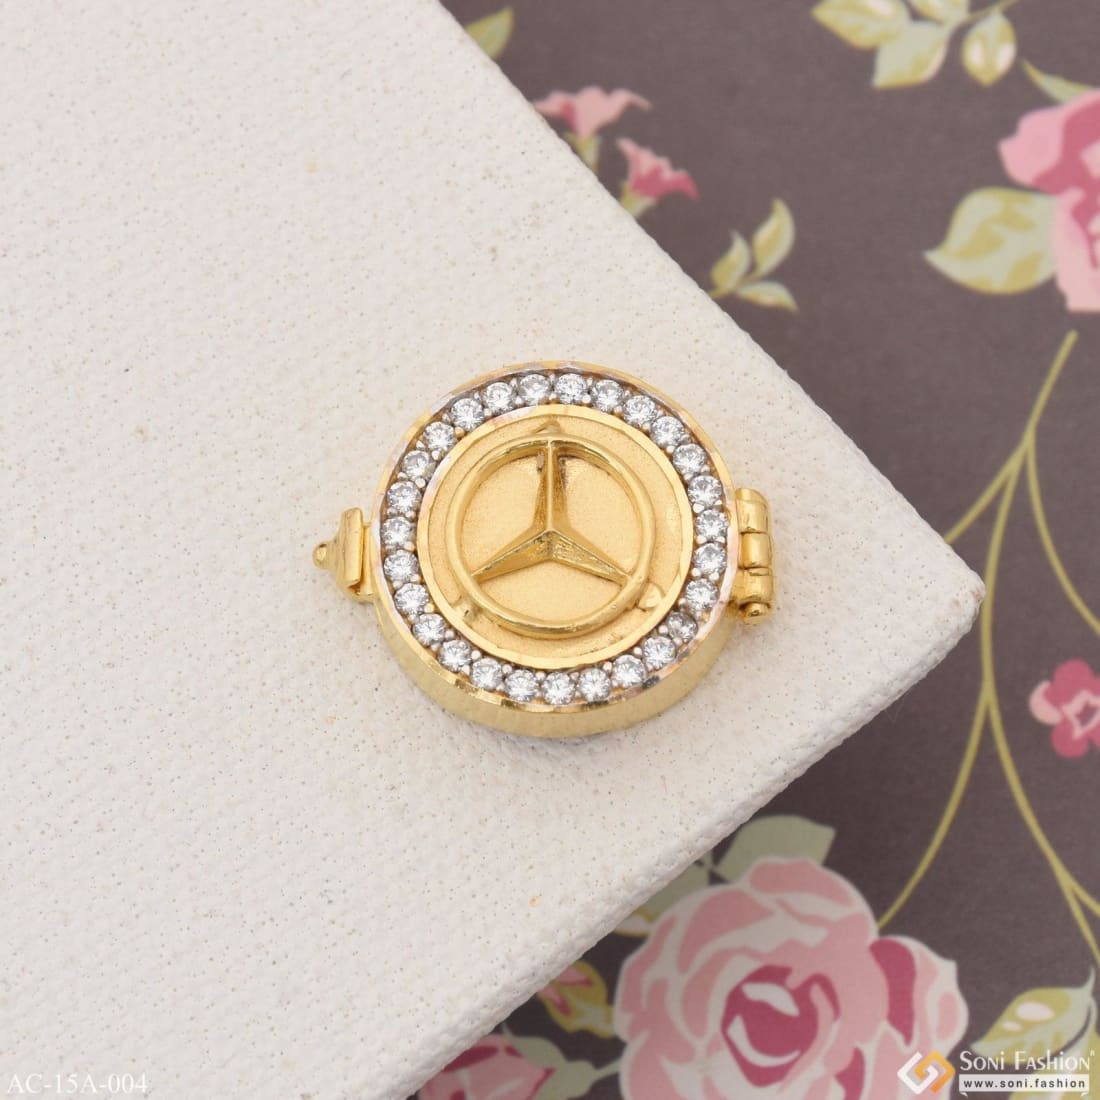 Mercedes Ring, Mercedes Benz Ring, 925 Sterling Silver, Latest Design 3d, mercedes Man's Ring, Gift for Him, Benz Logo Ring,man's Gift Ring - Etsy |  Mens gifts, Rings for men, Ring gift